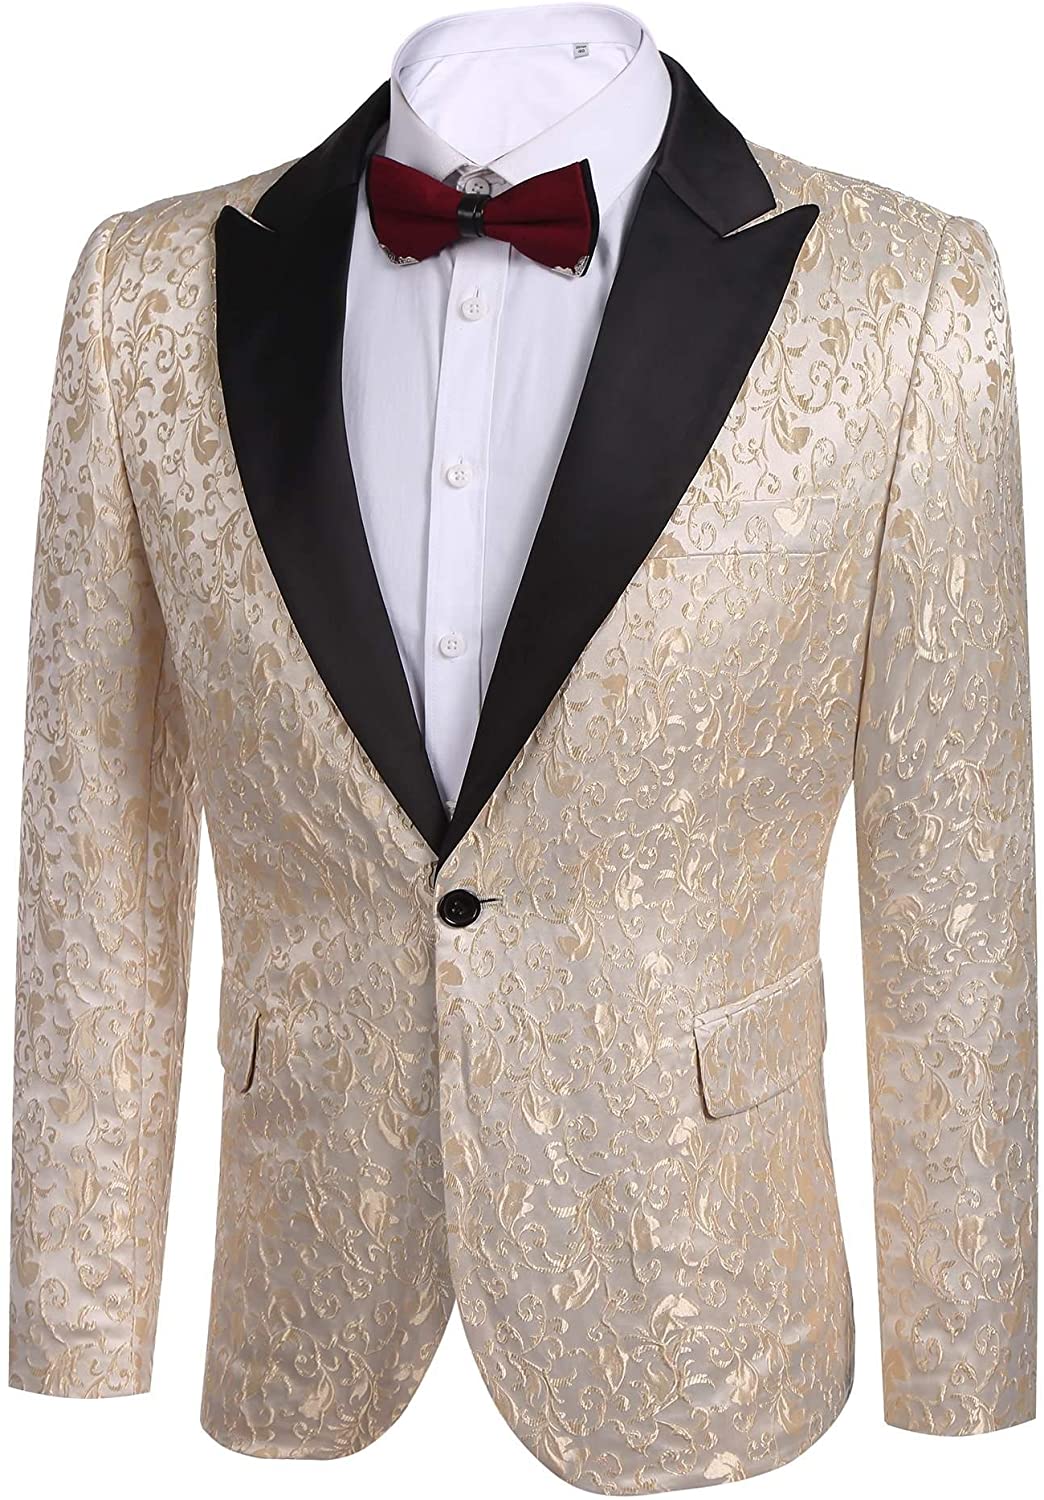 COOFANDY Men's Floral Party Dress Suit Stylish Dinner Jacket Wedding ...